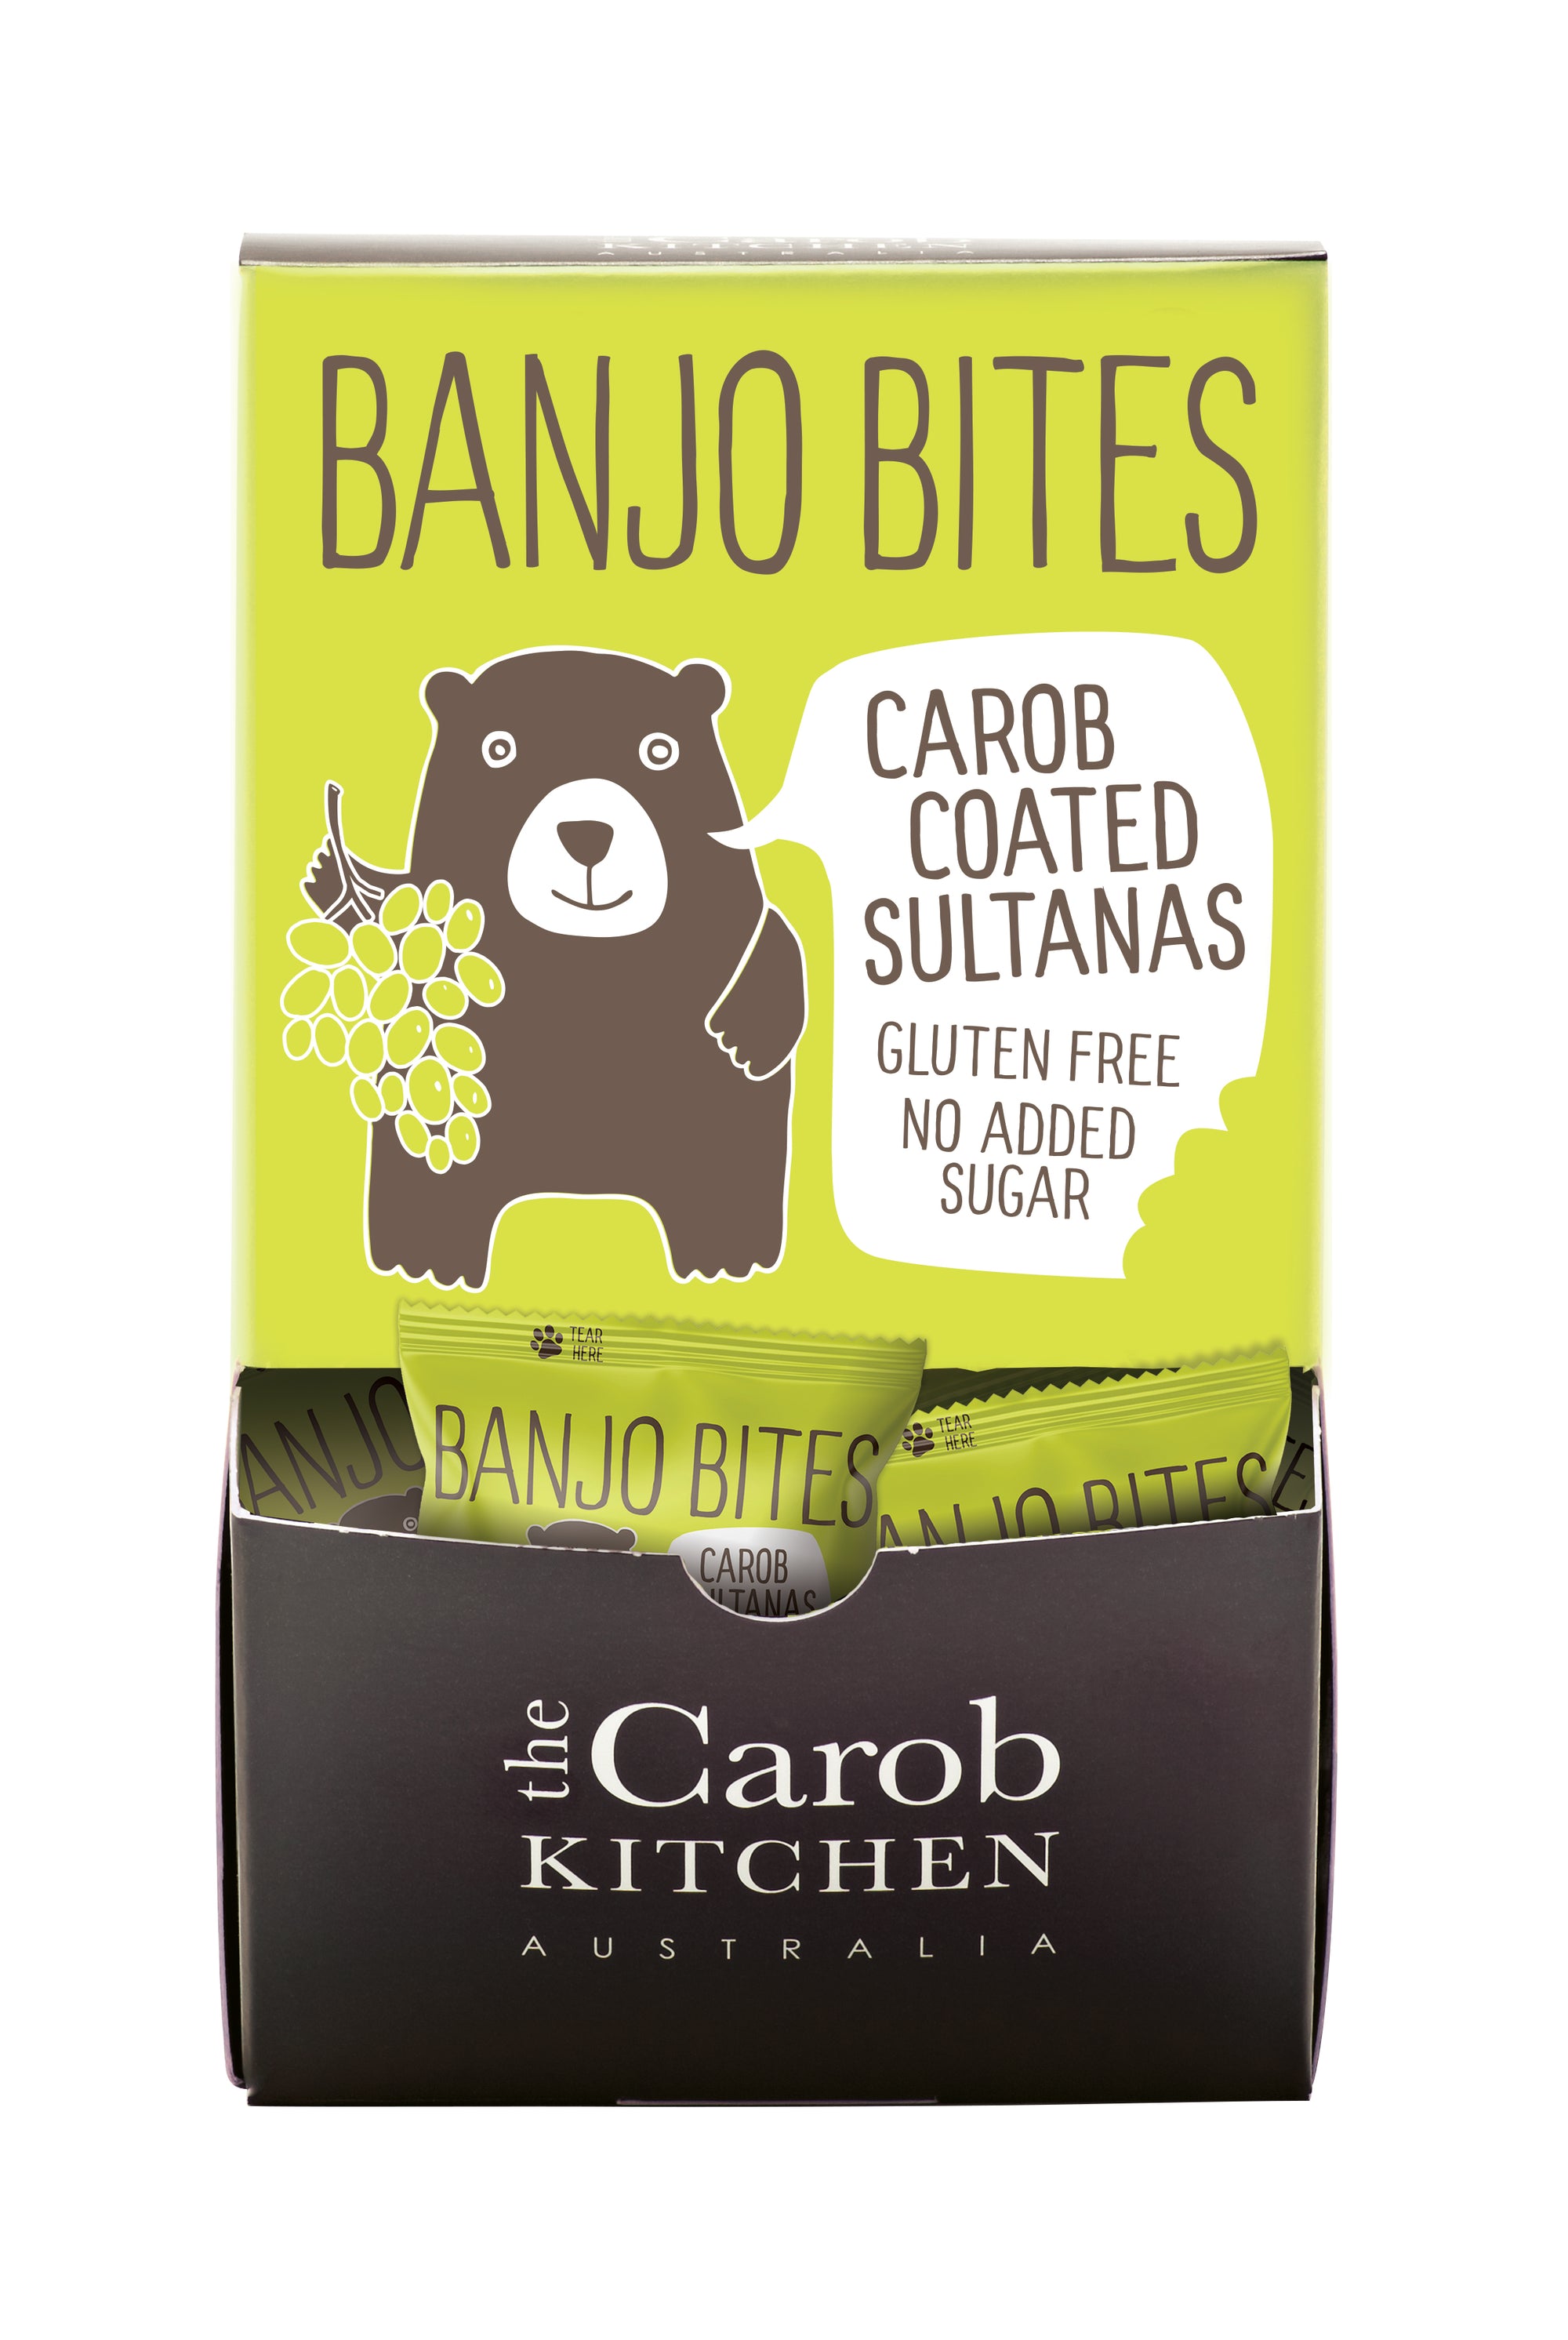 Banjo Bites Carob Coated Sultanas 20g x 45